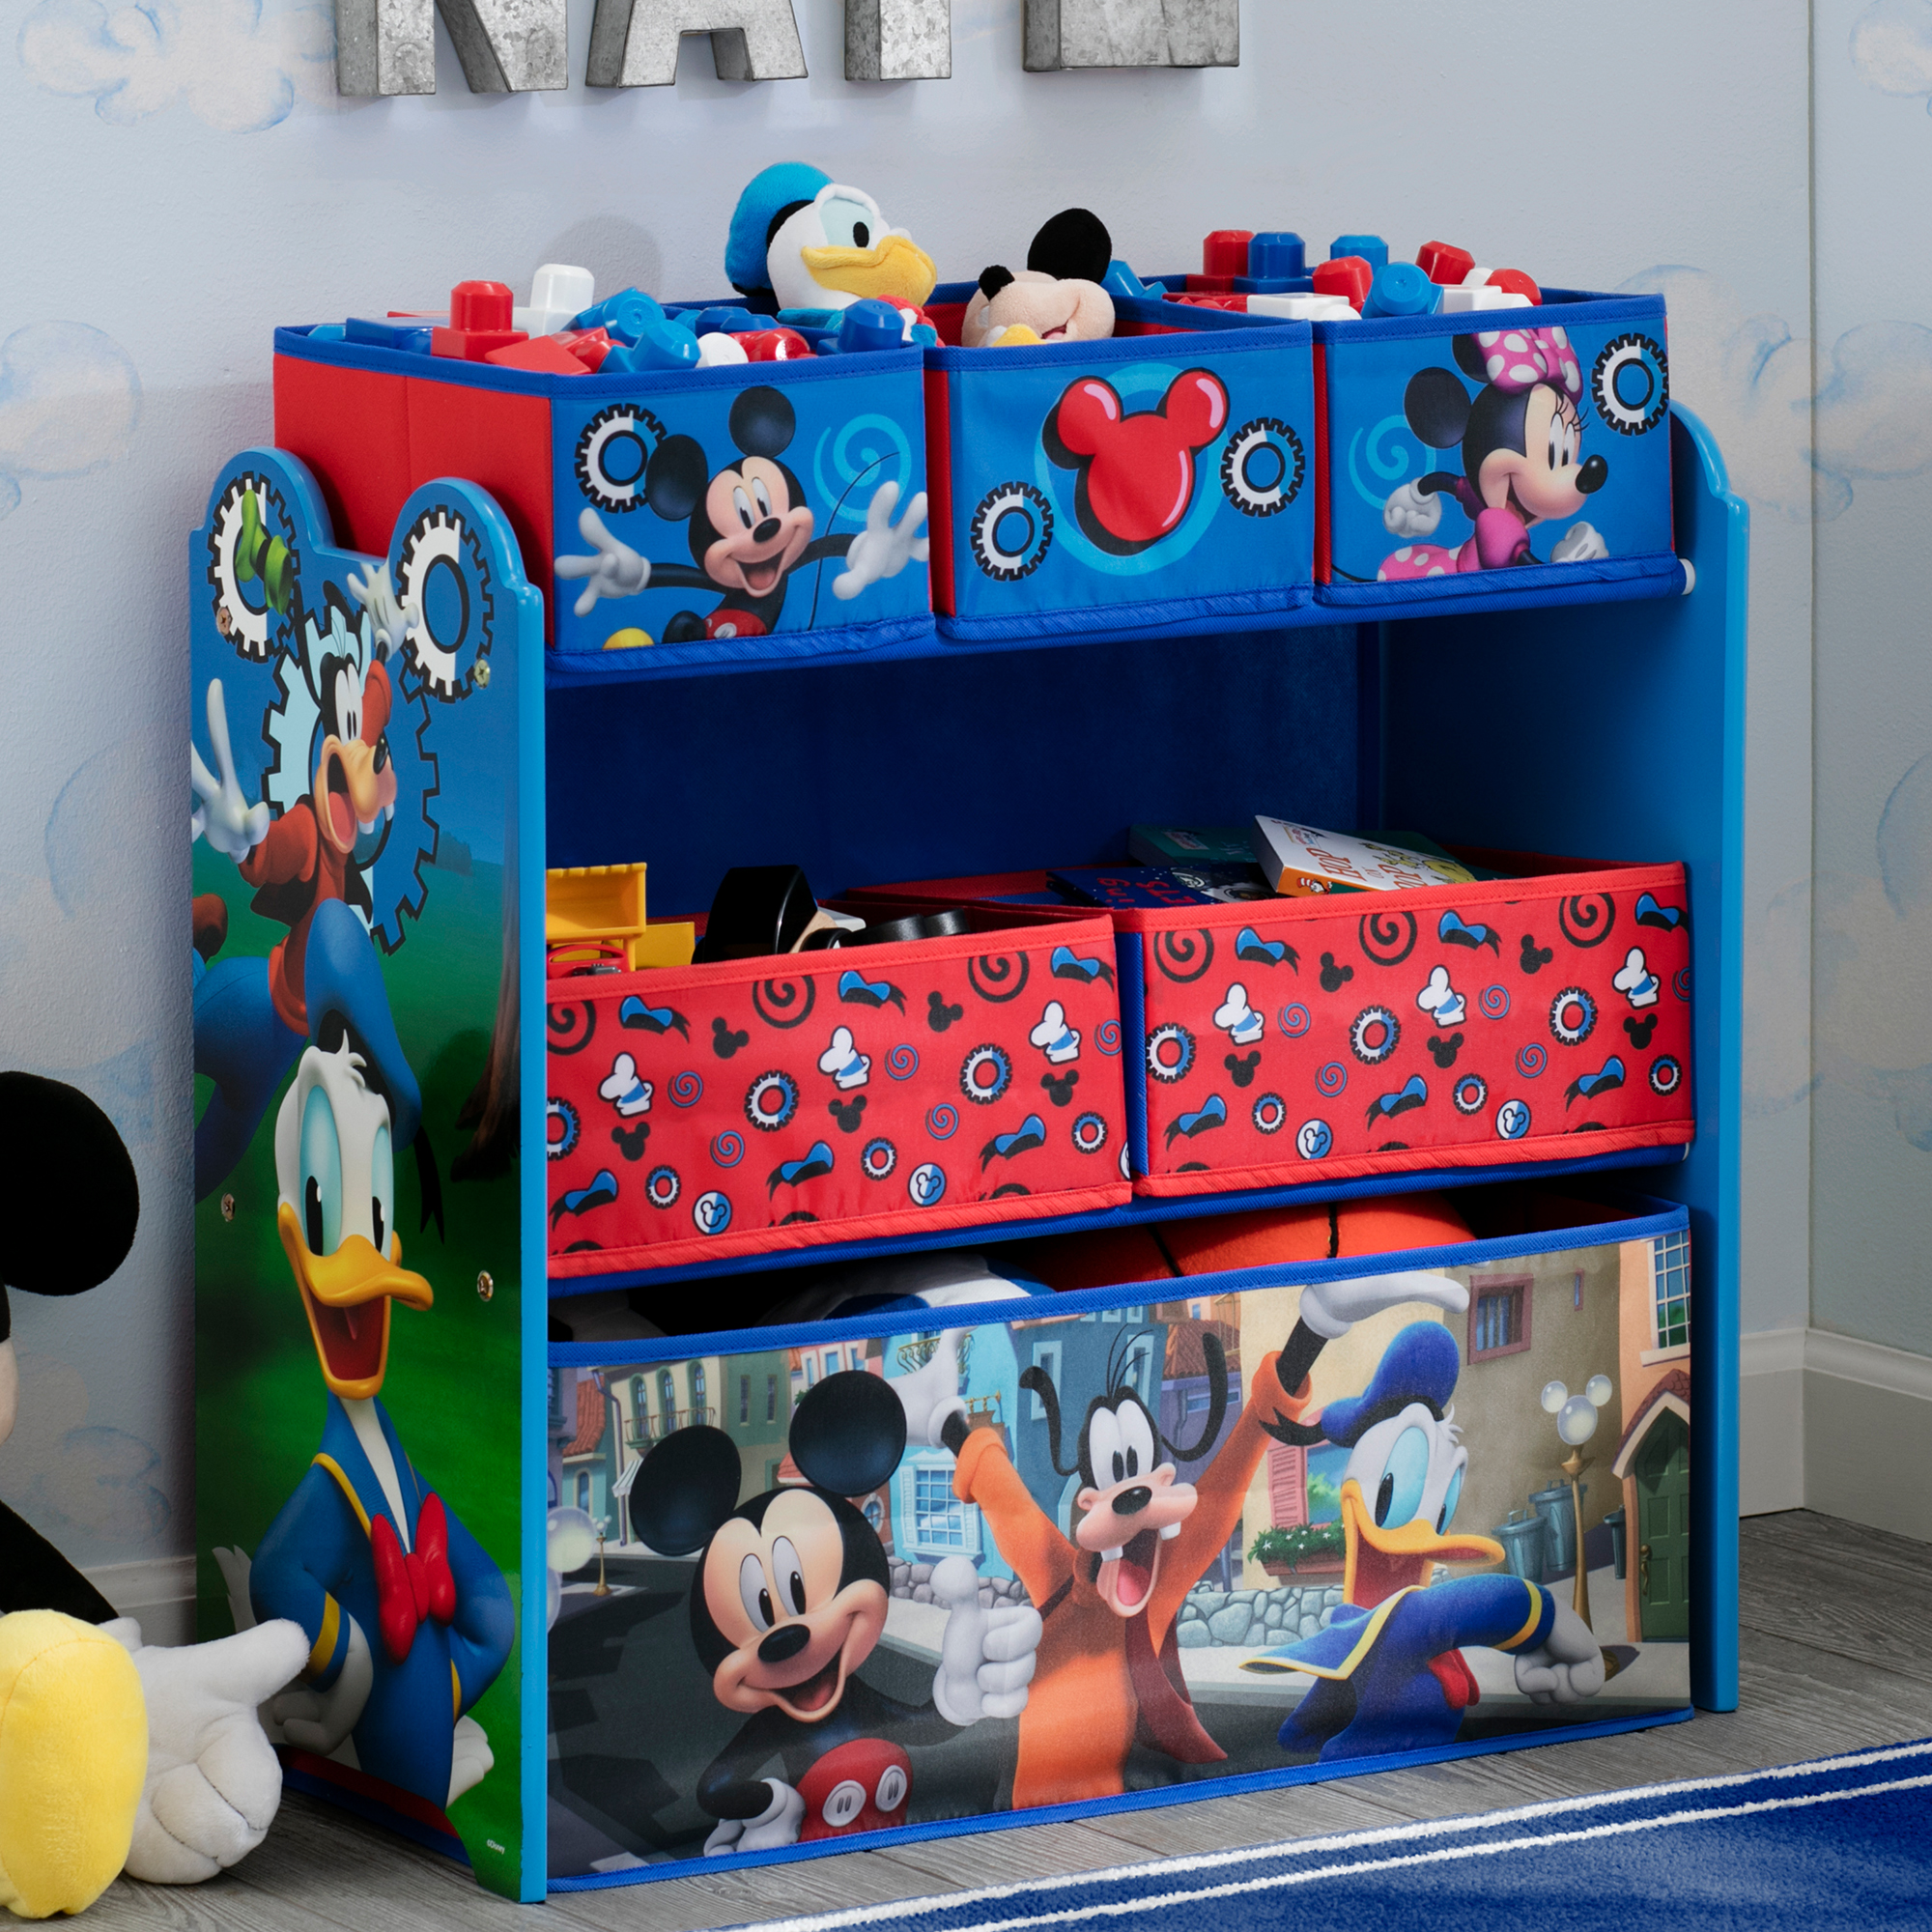 Disney Mickey Mouse Multi-Bin Toy Organizer by Delta Children - image 3 of 7